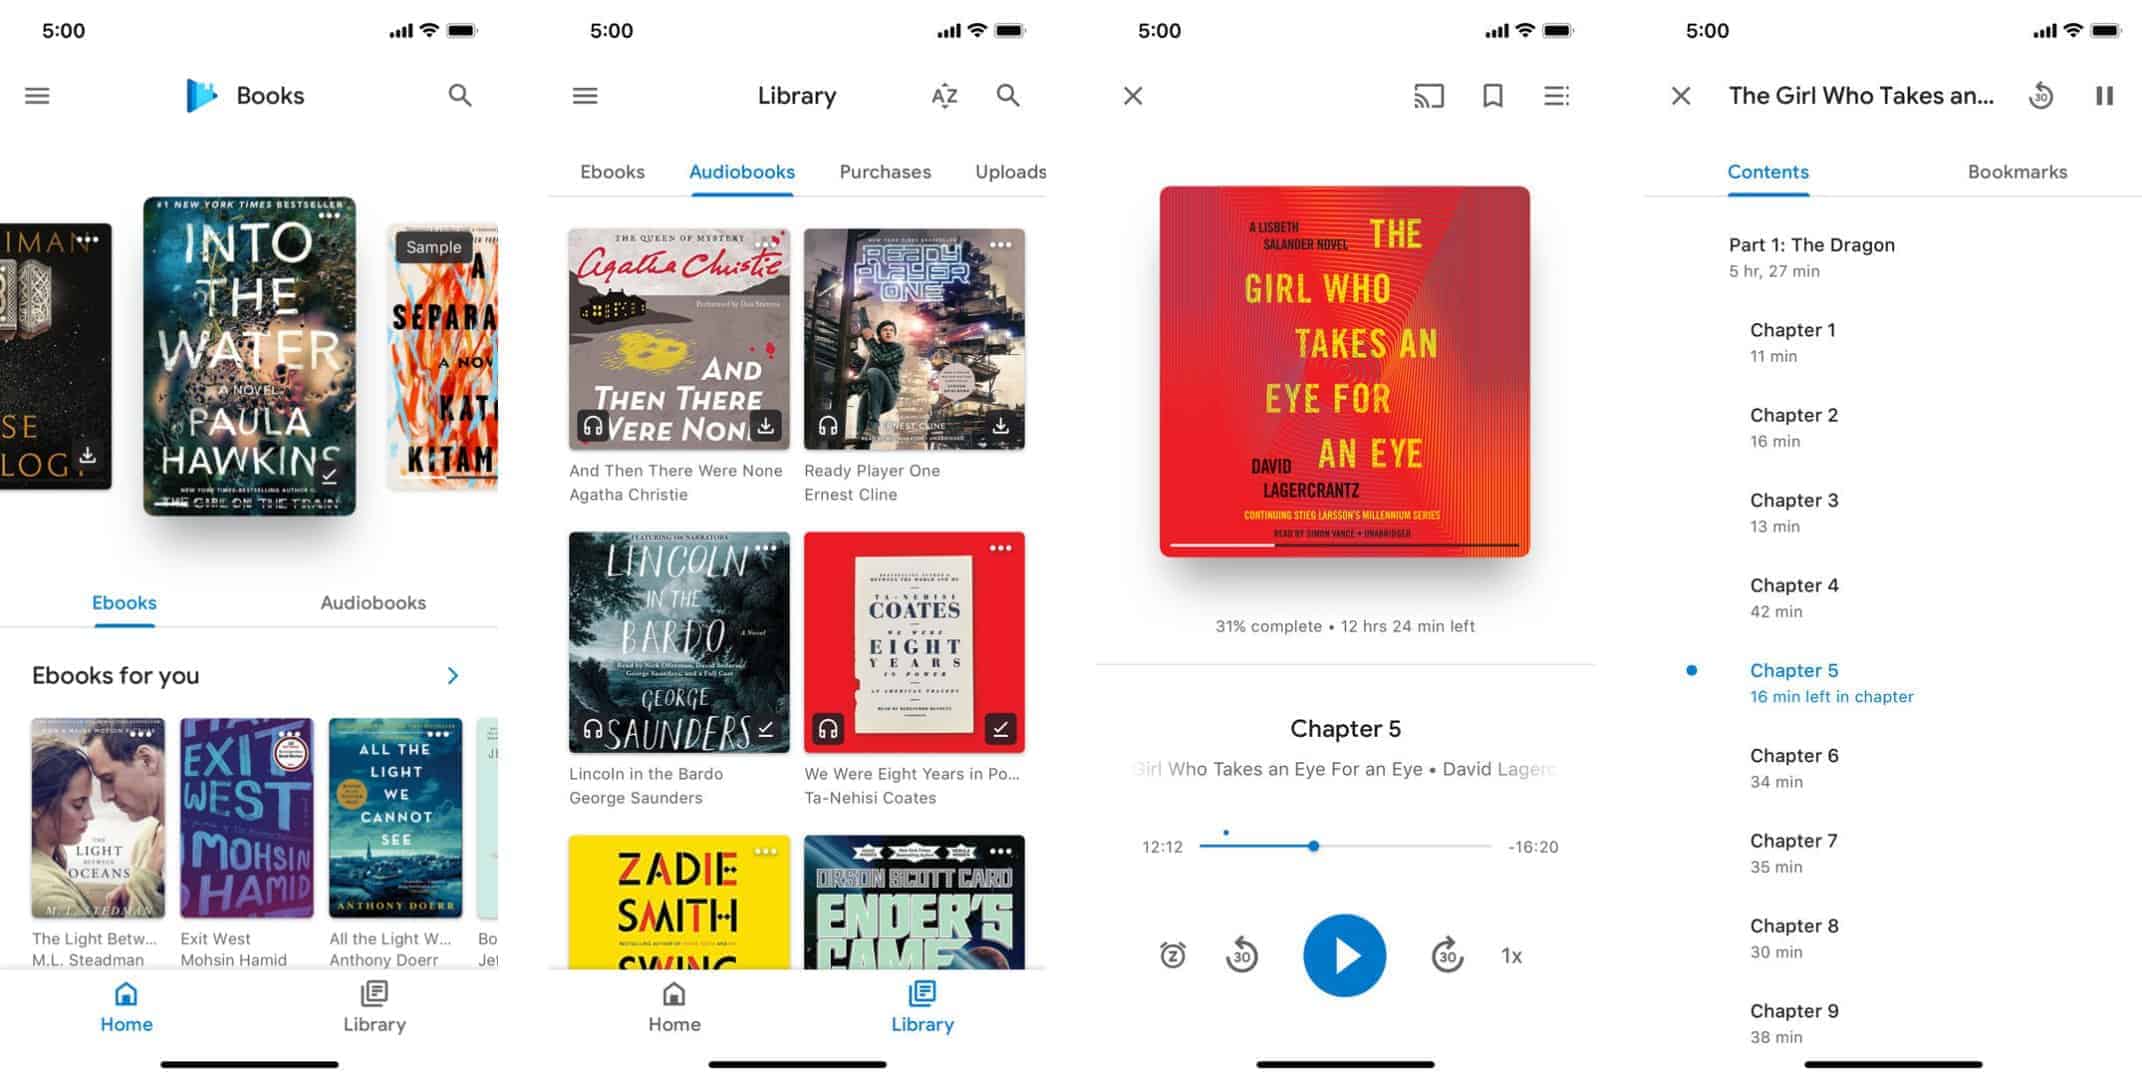 Google Play Books iOS app gets a brand new look